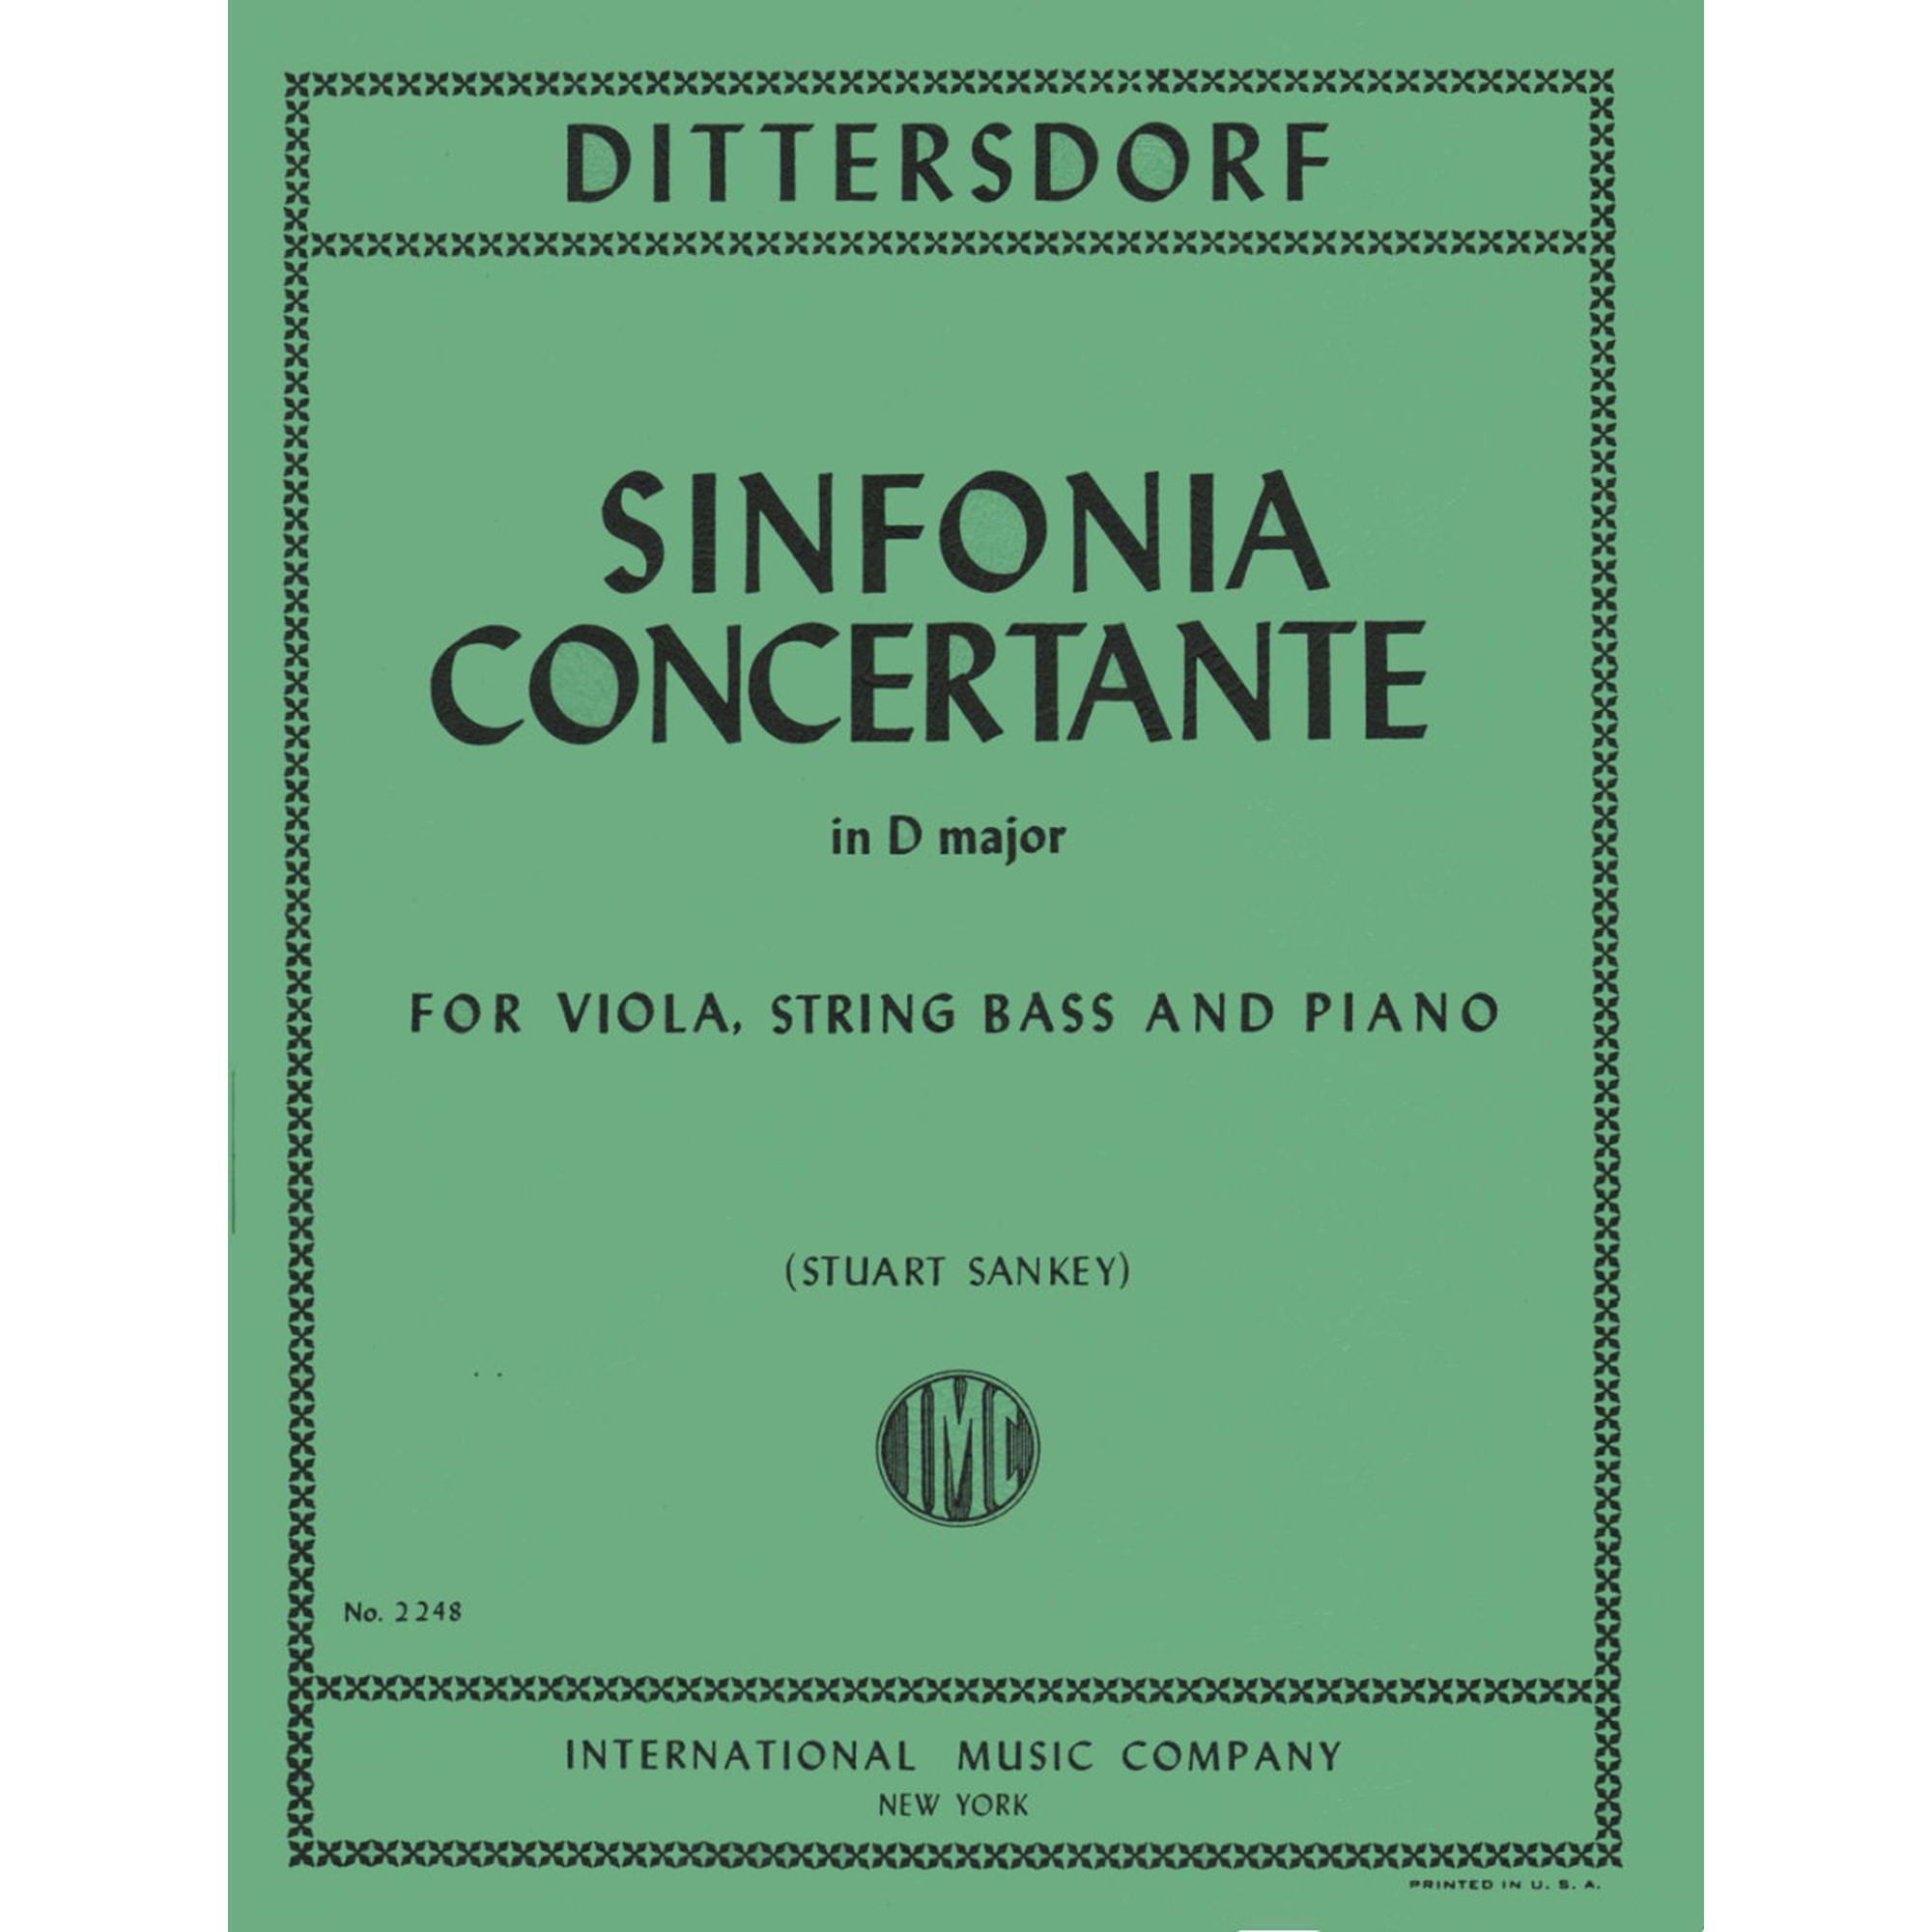 Sinfonia concertante dittersdorf pdf online